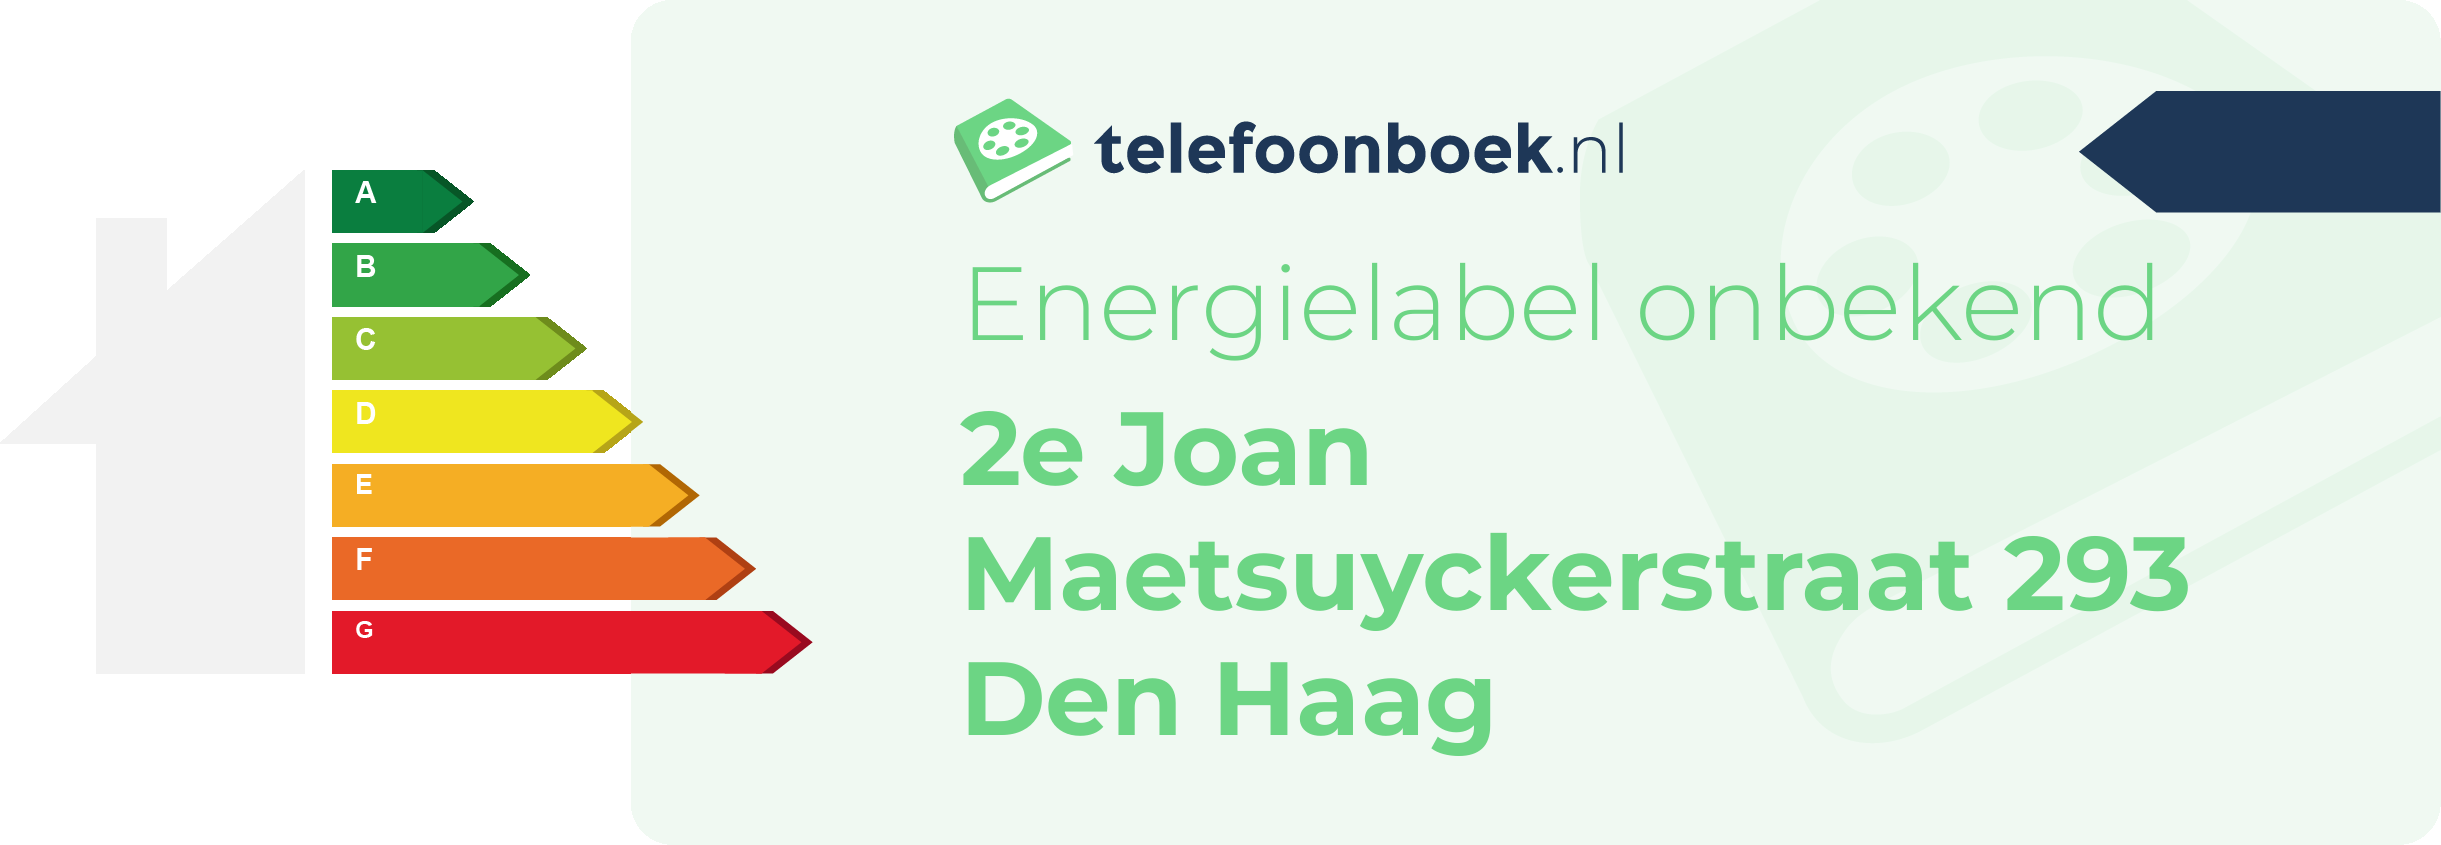 Energielabel 2e Joan Maetsuyckerstraat 293 Den Haag